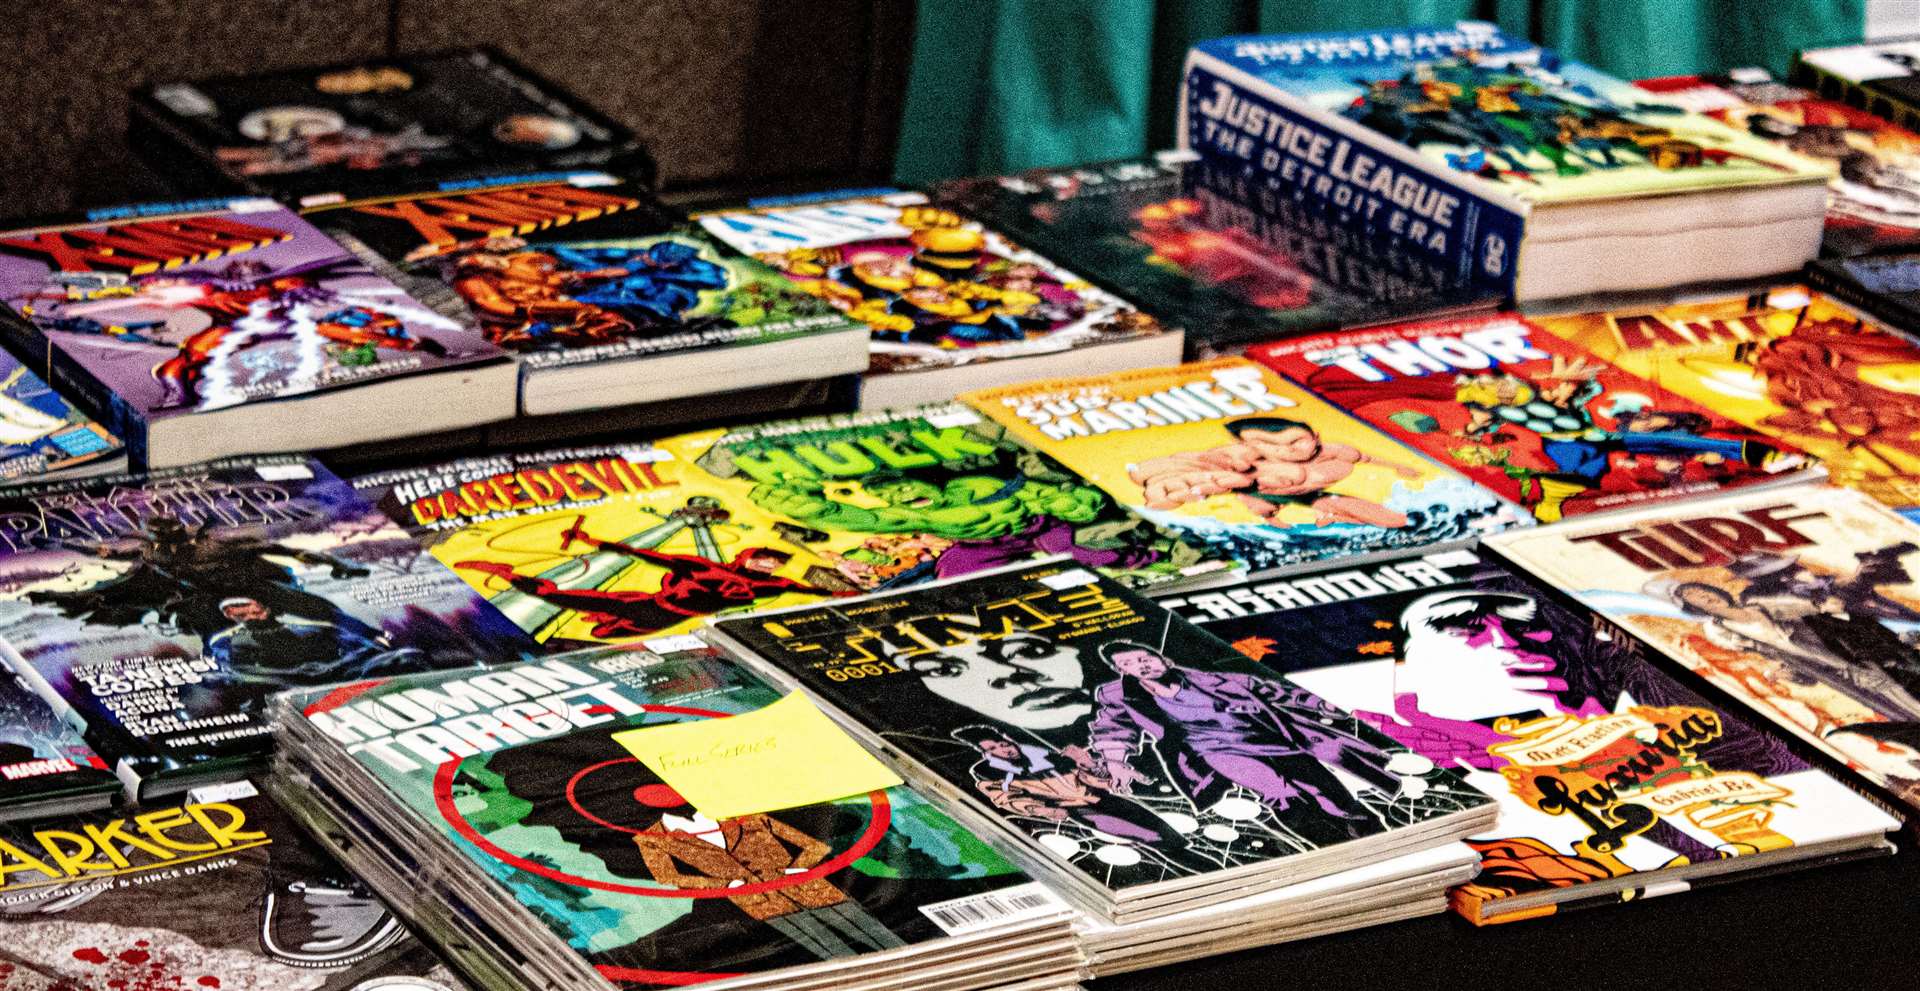 Comic books were on sale. Photo: Niall Harkiss